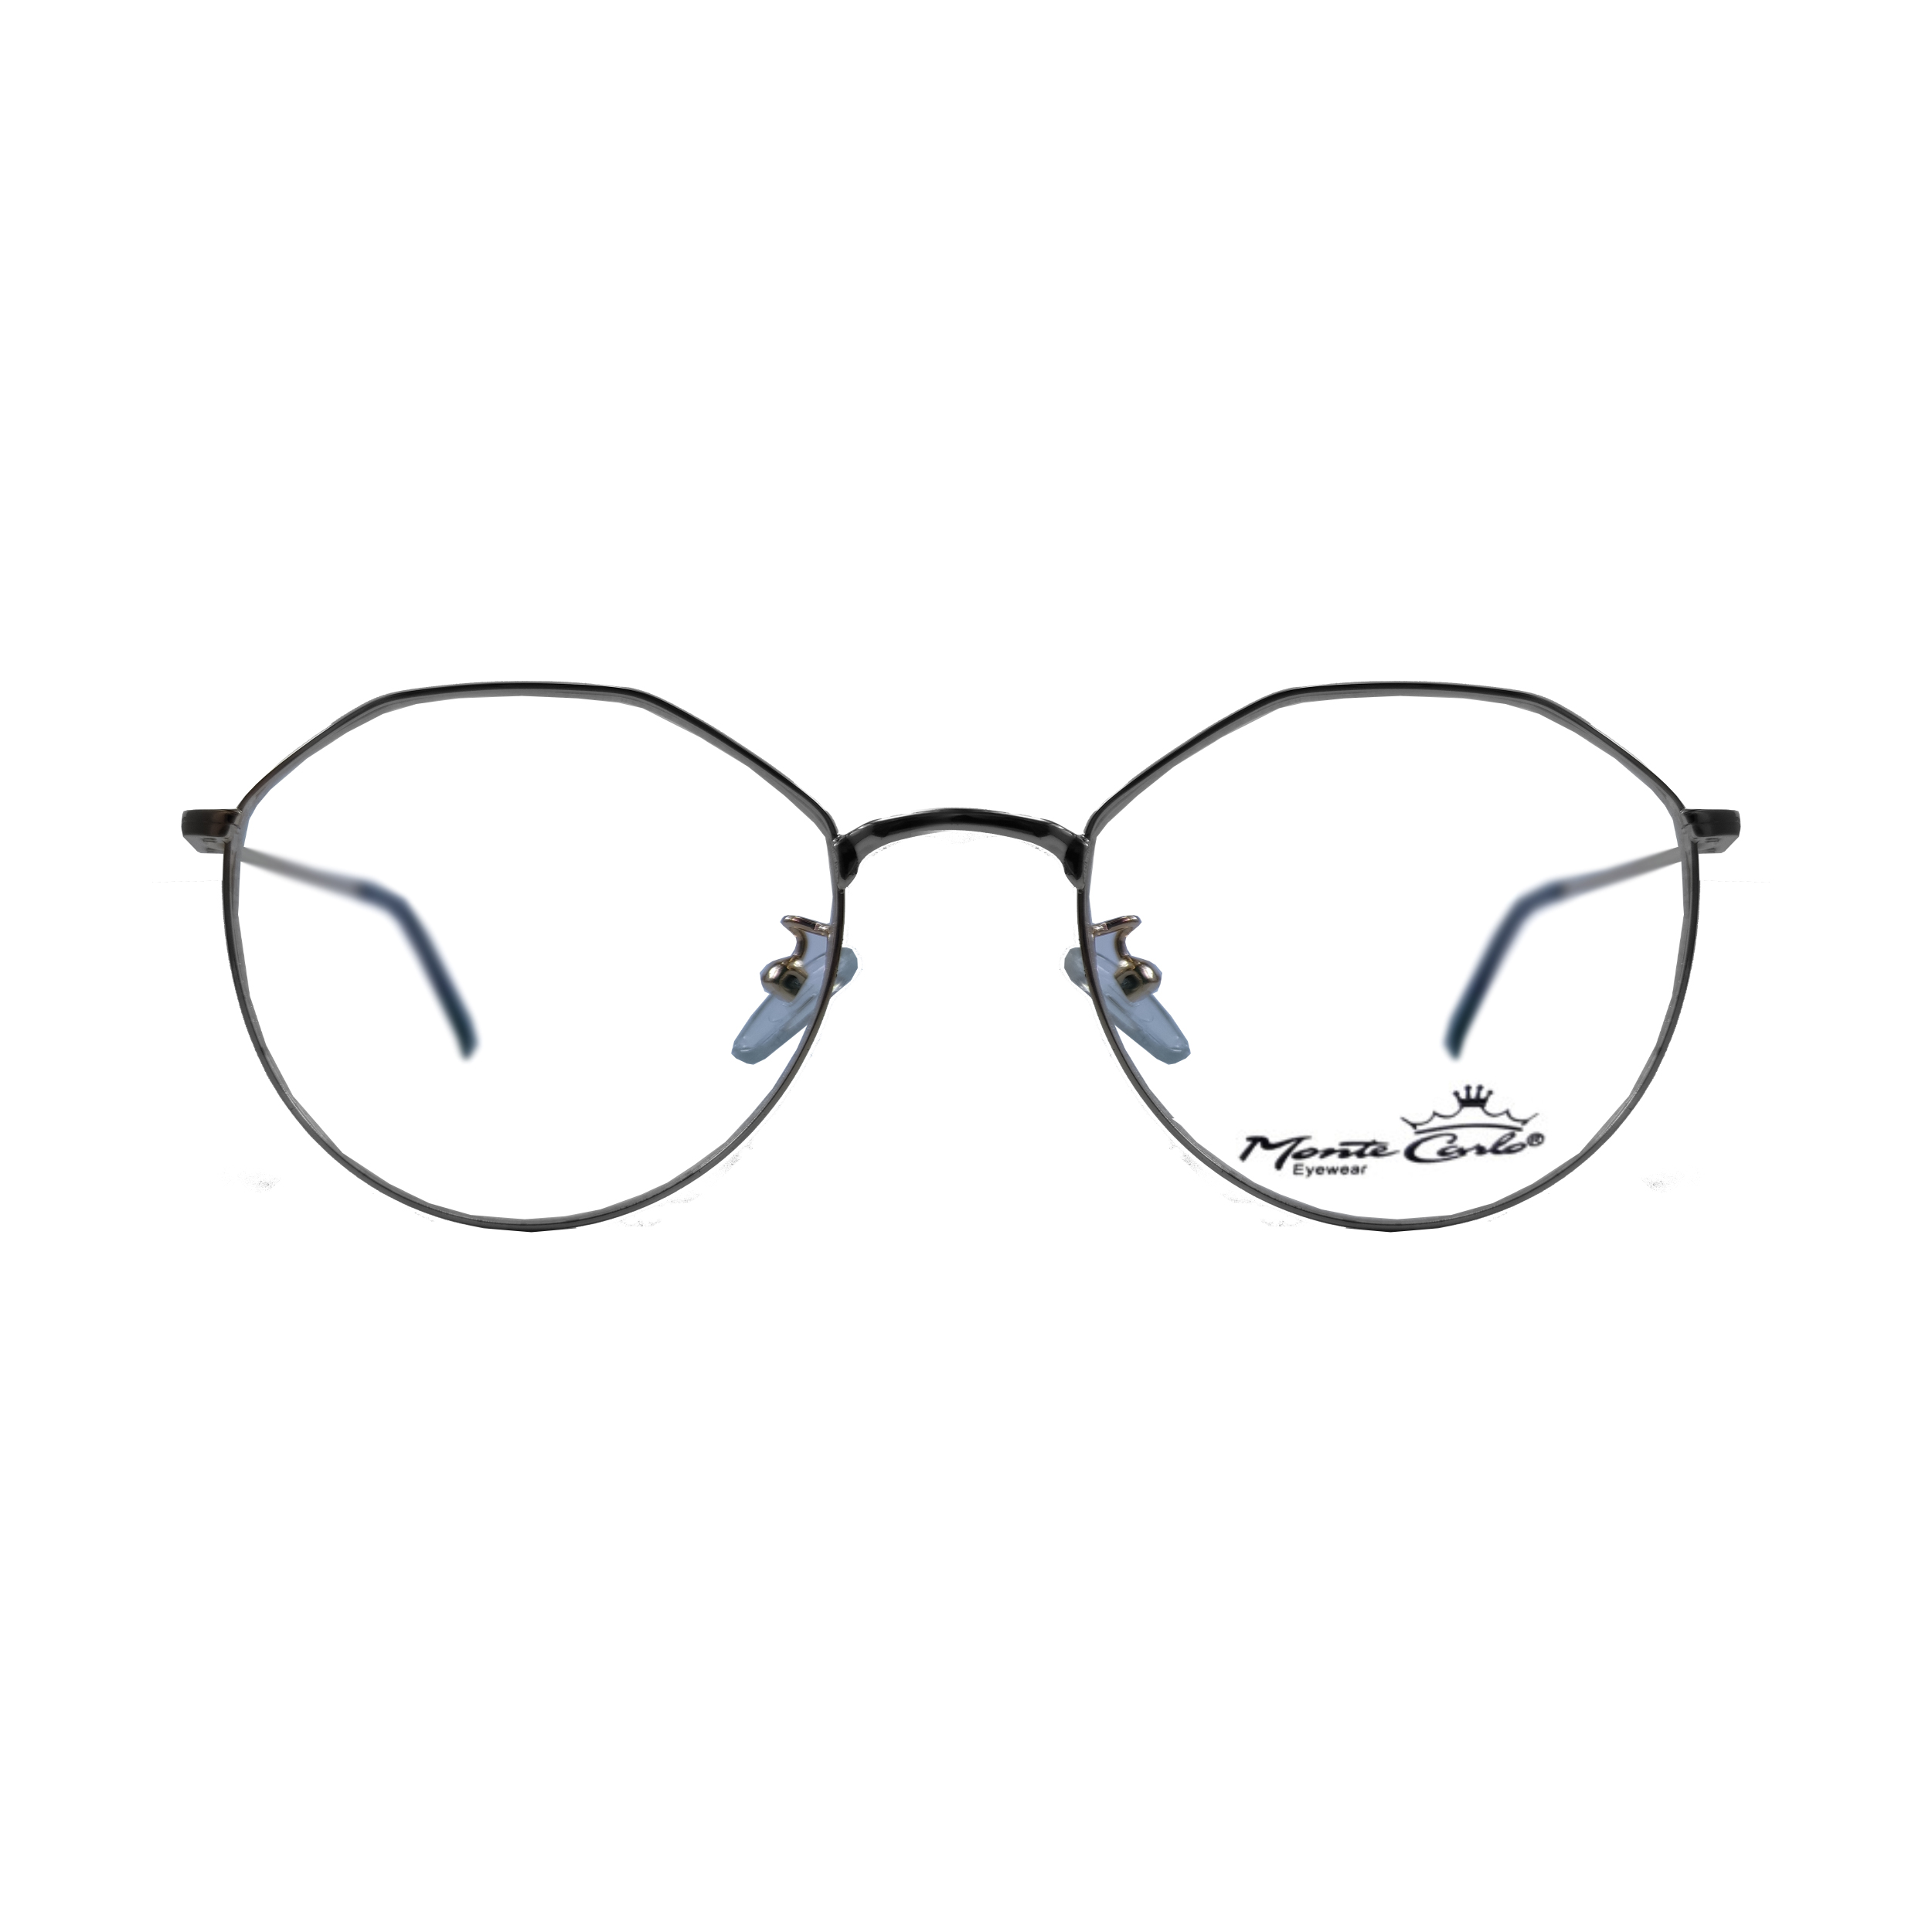 فریم عینک طبی مونته کارلو مدل 3219 کد 111 -  - 1